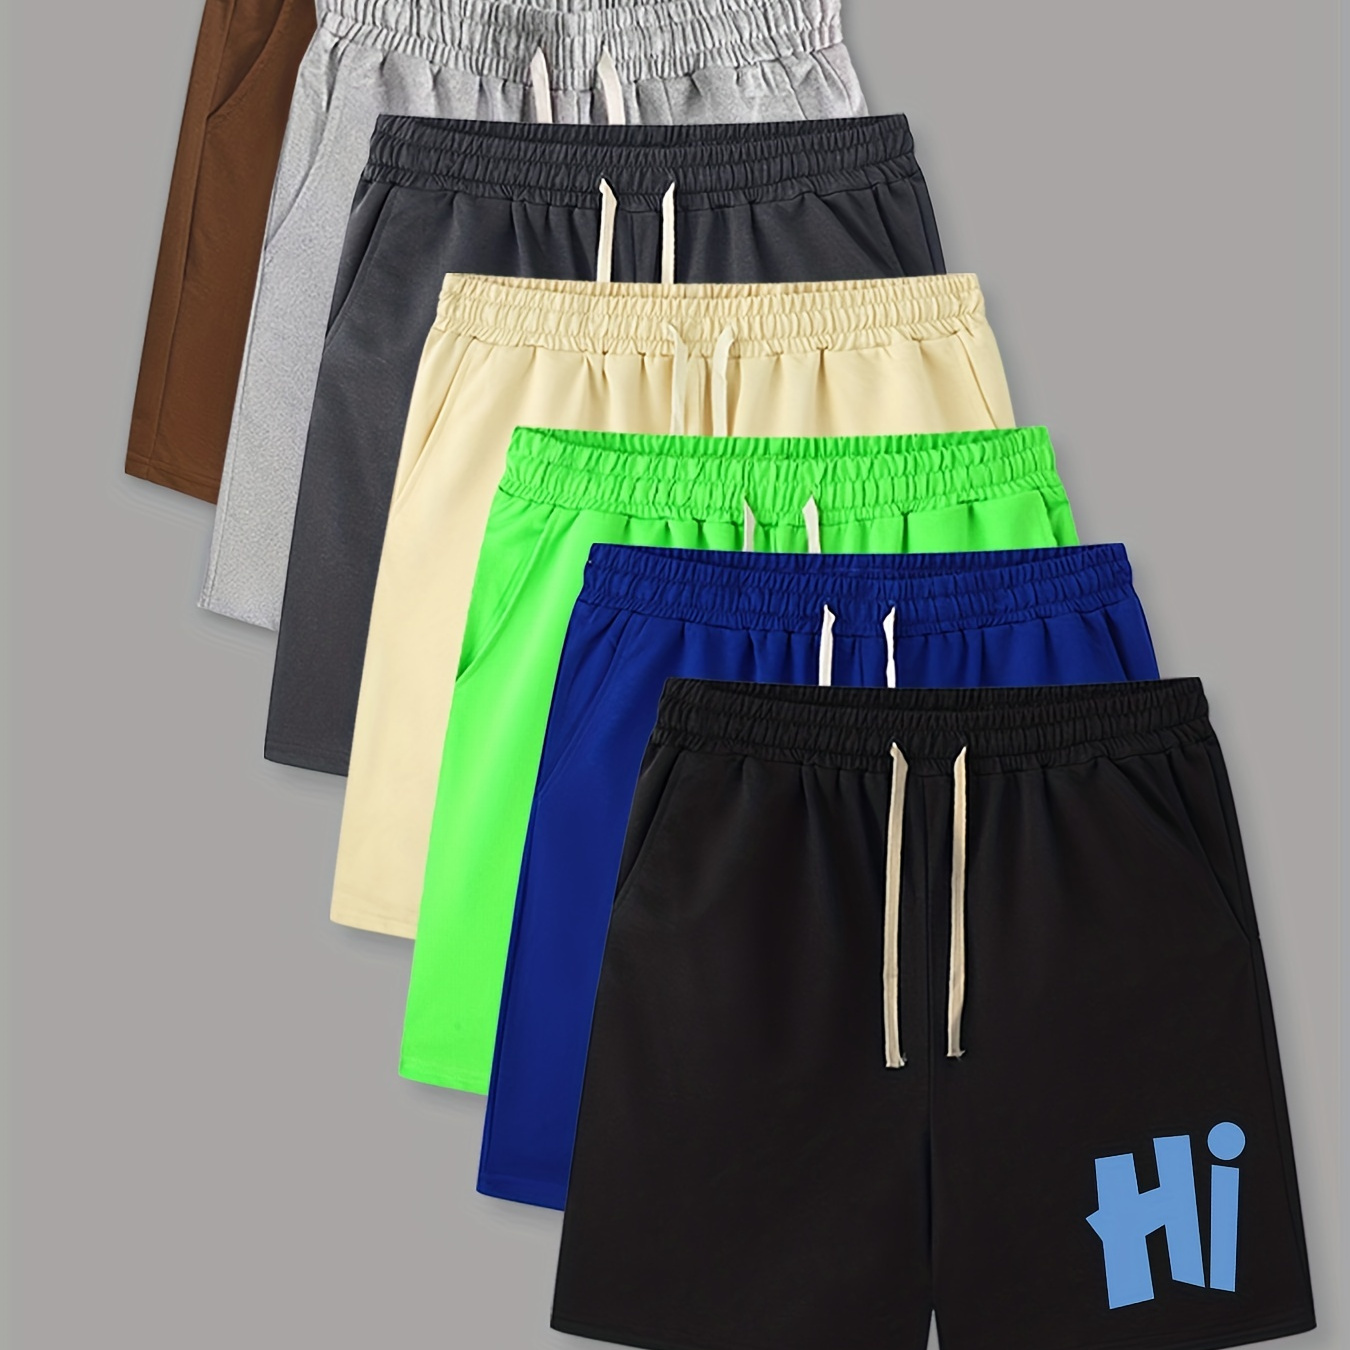 

Men's Vintage Hi Print Sport Shorts - Assorted Colors & Slightly Stretchy Drawstring For Summer Outdoor Fun!